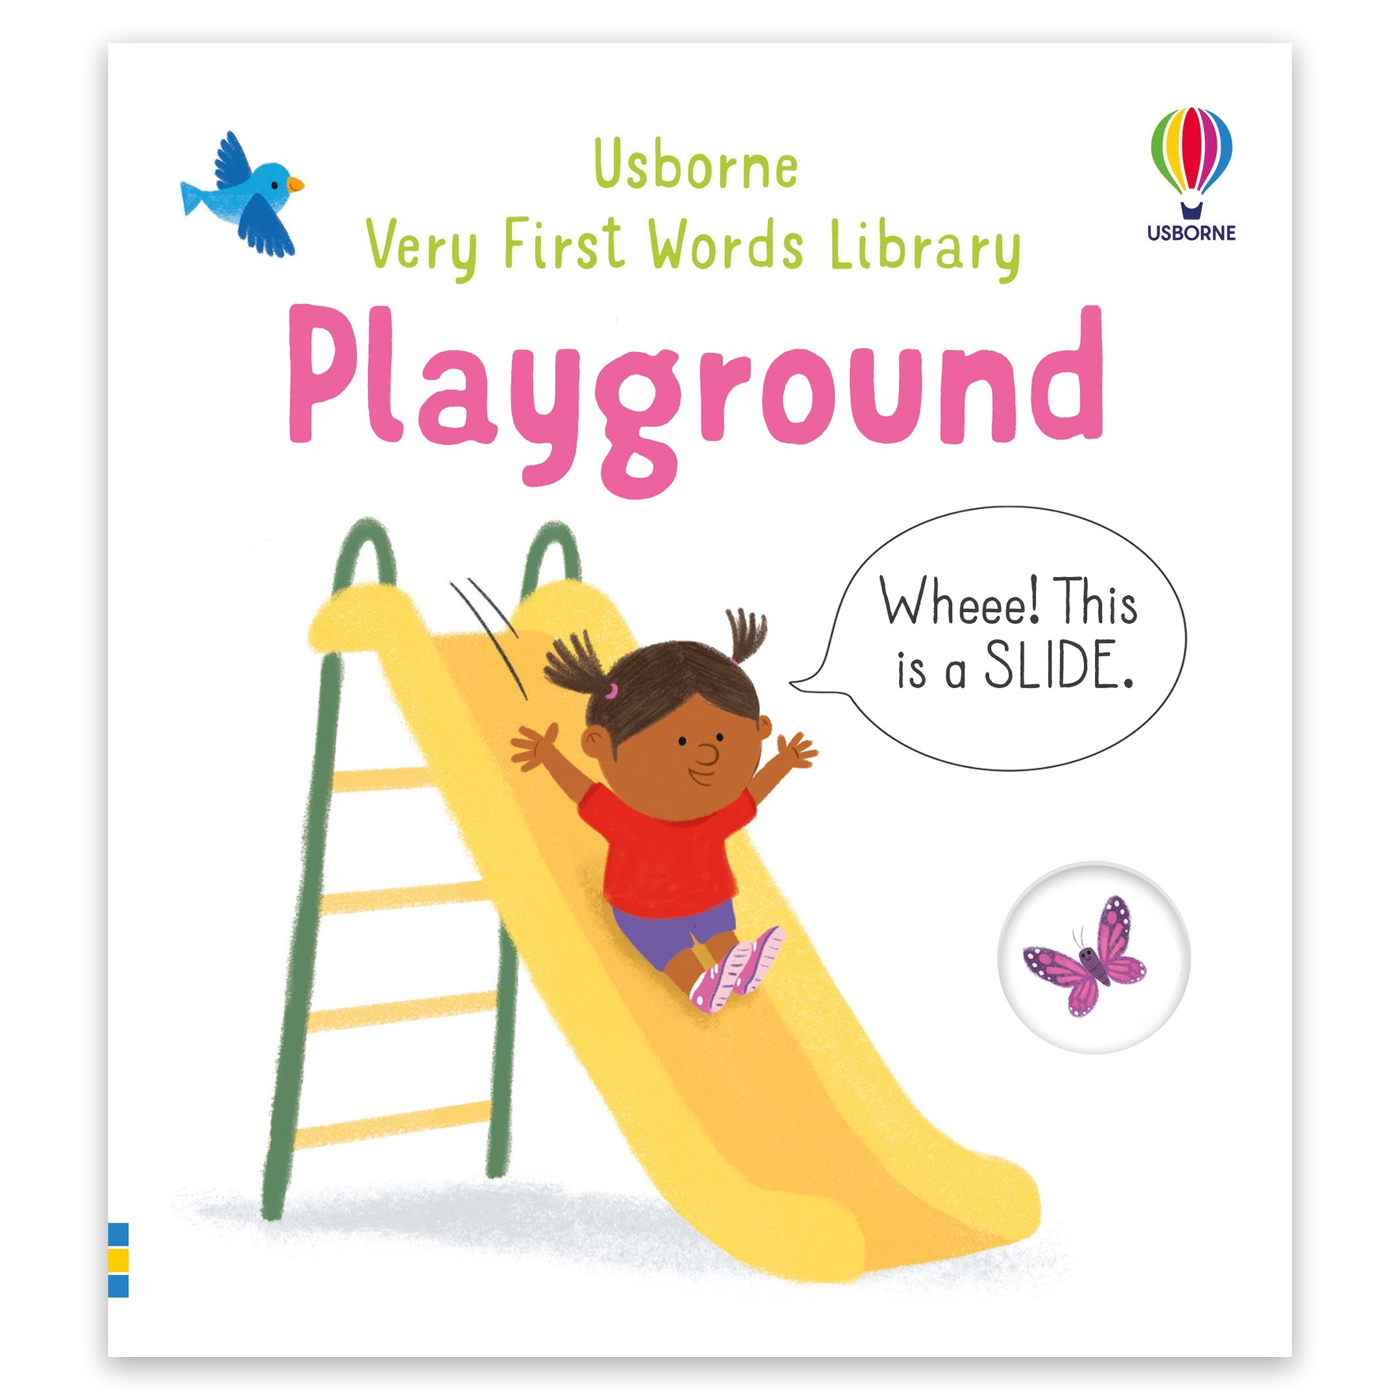 USBORNE Very First Words Library: Playground